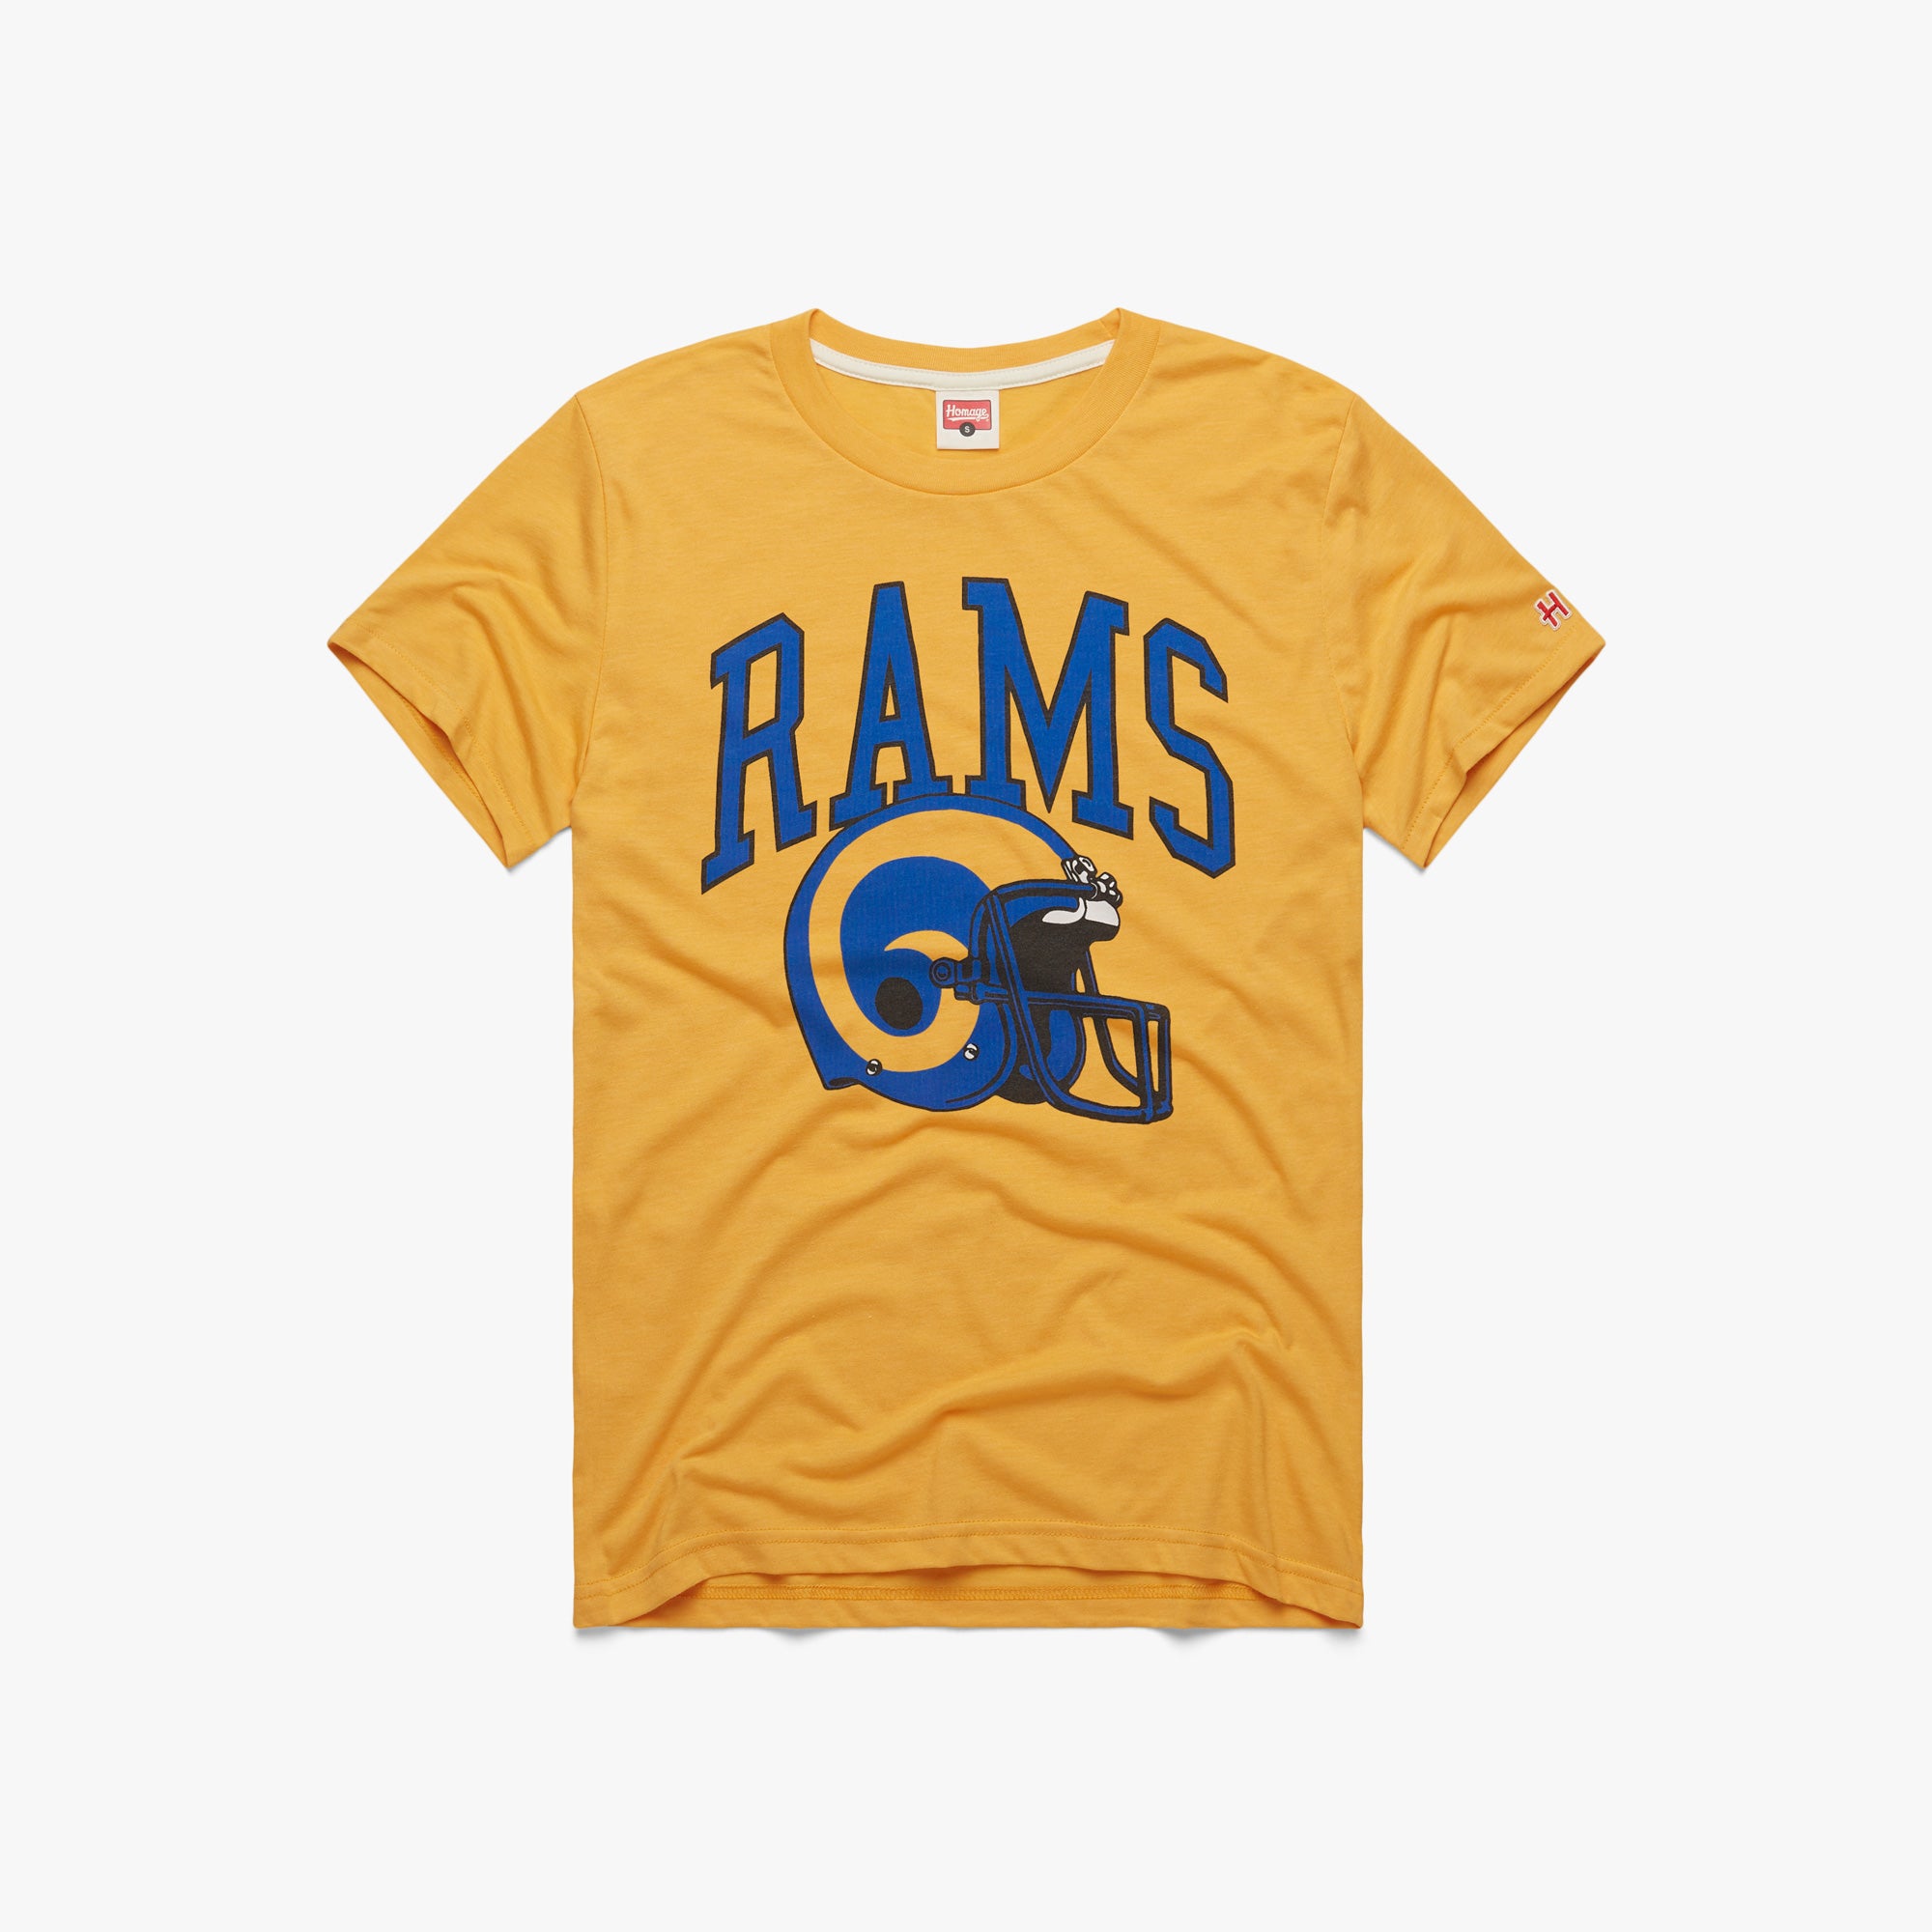 Los Angeles Rams Shirt - Retro California Football Apparel Men